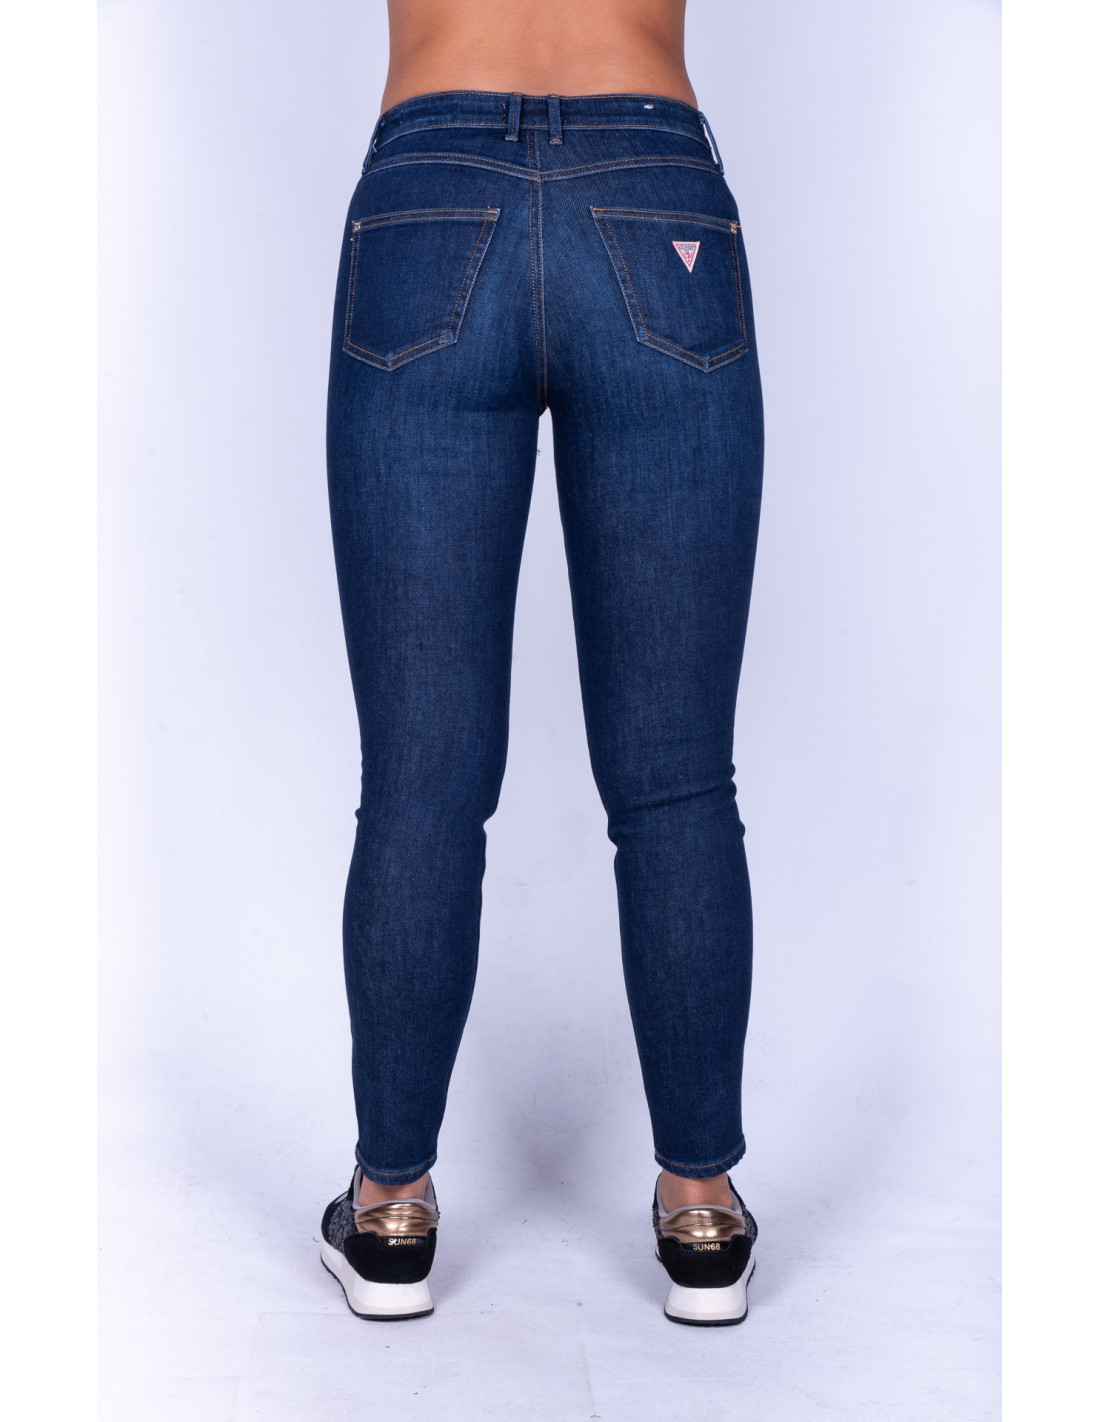 https://www.dragonemoda.com/30119-thickbox_default/skinny-guess-women-s-jeans.jpg